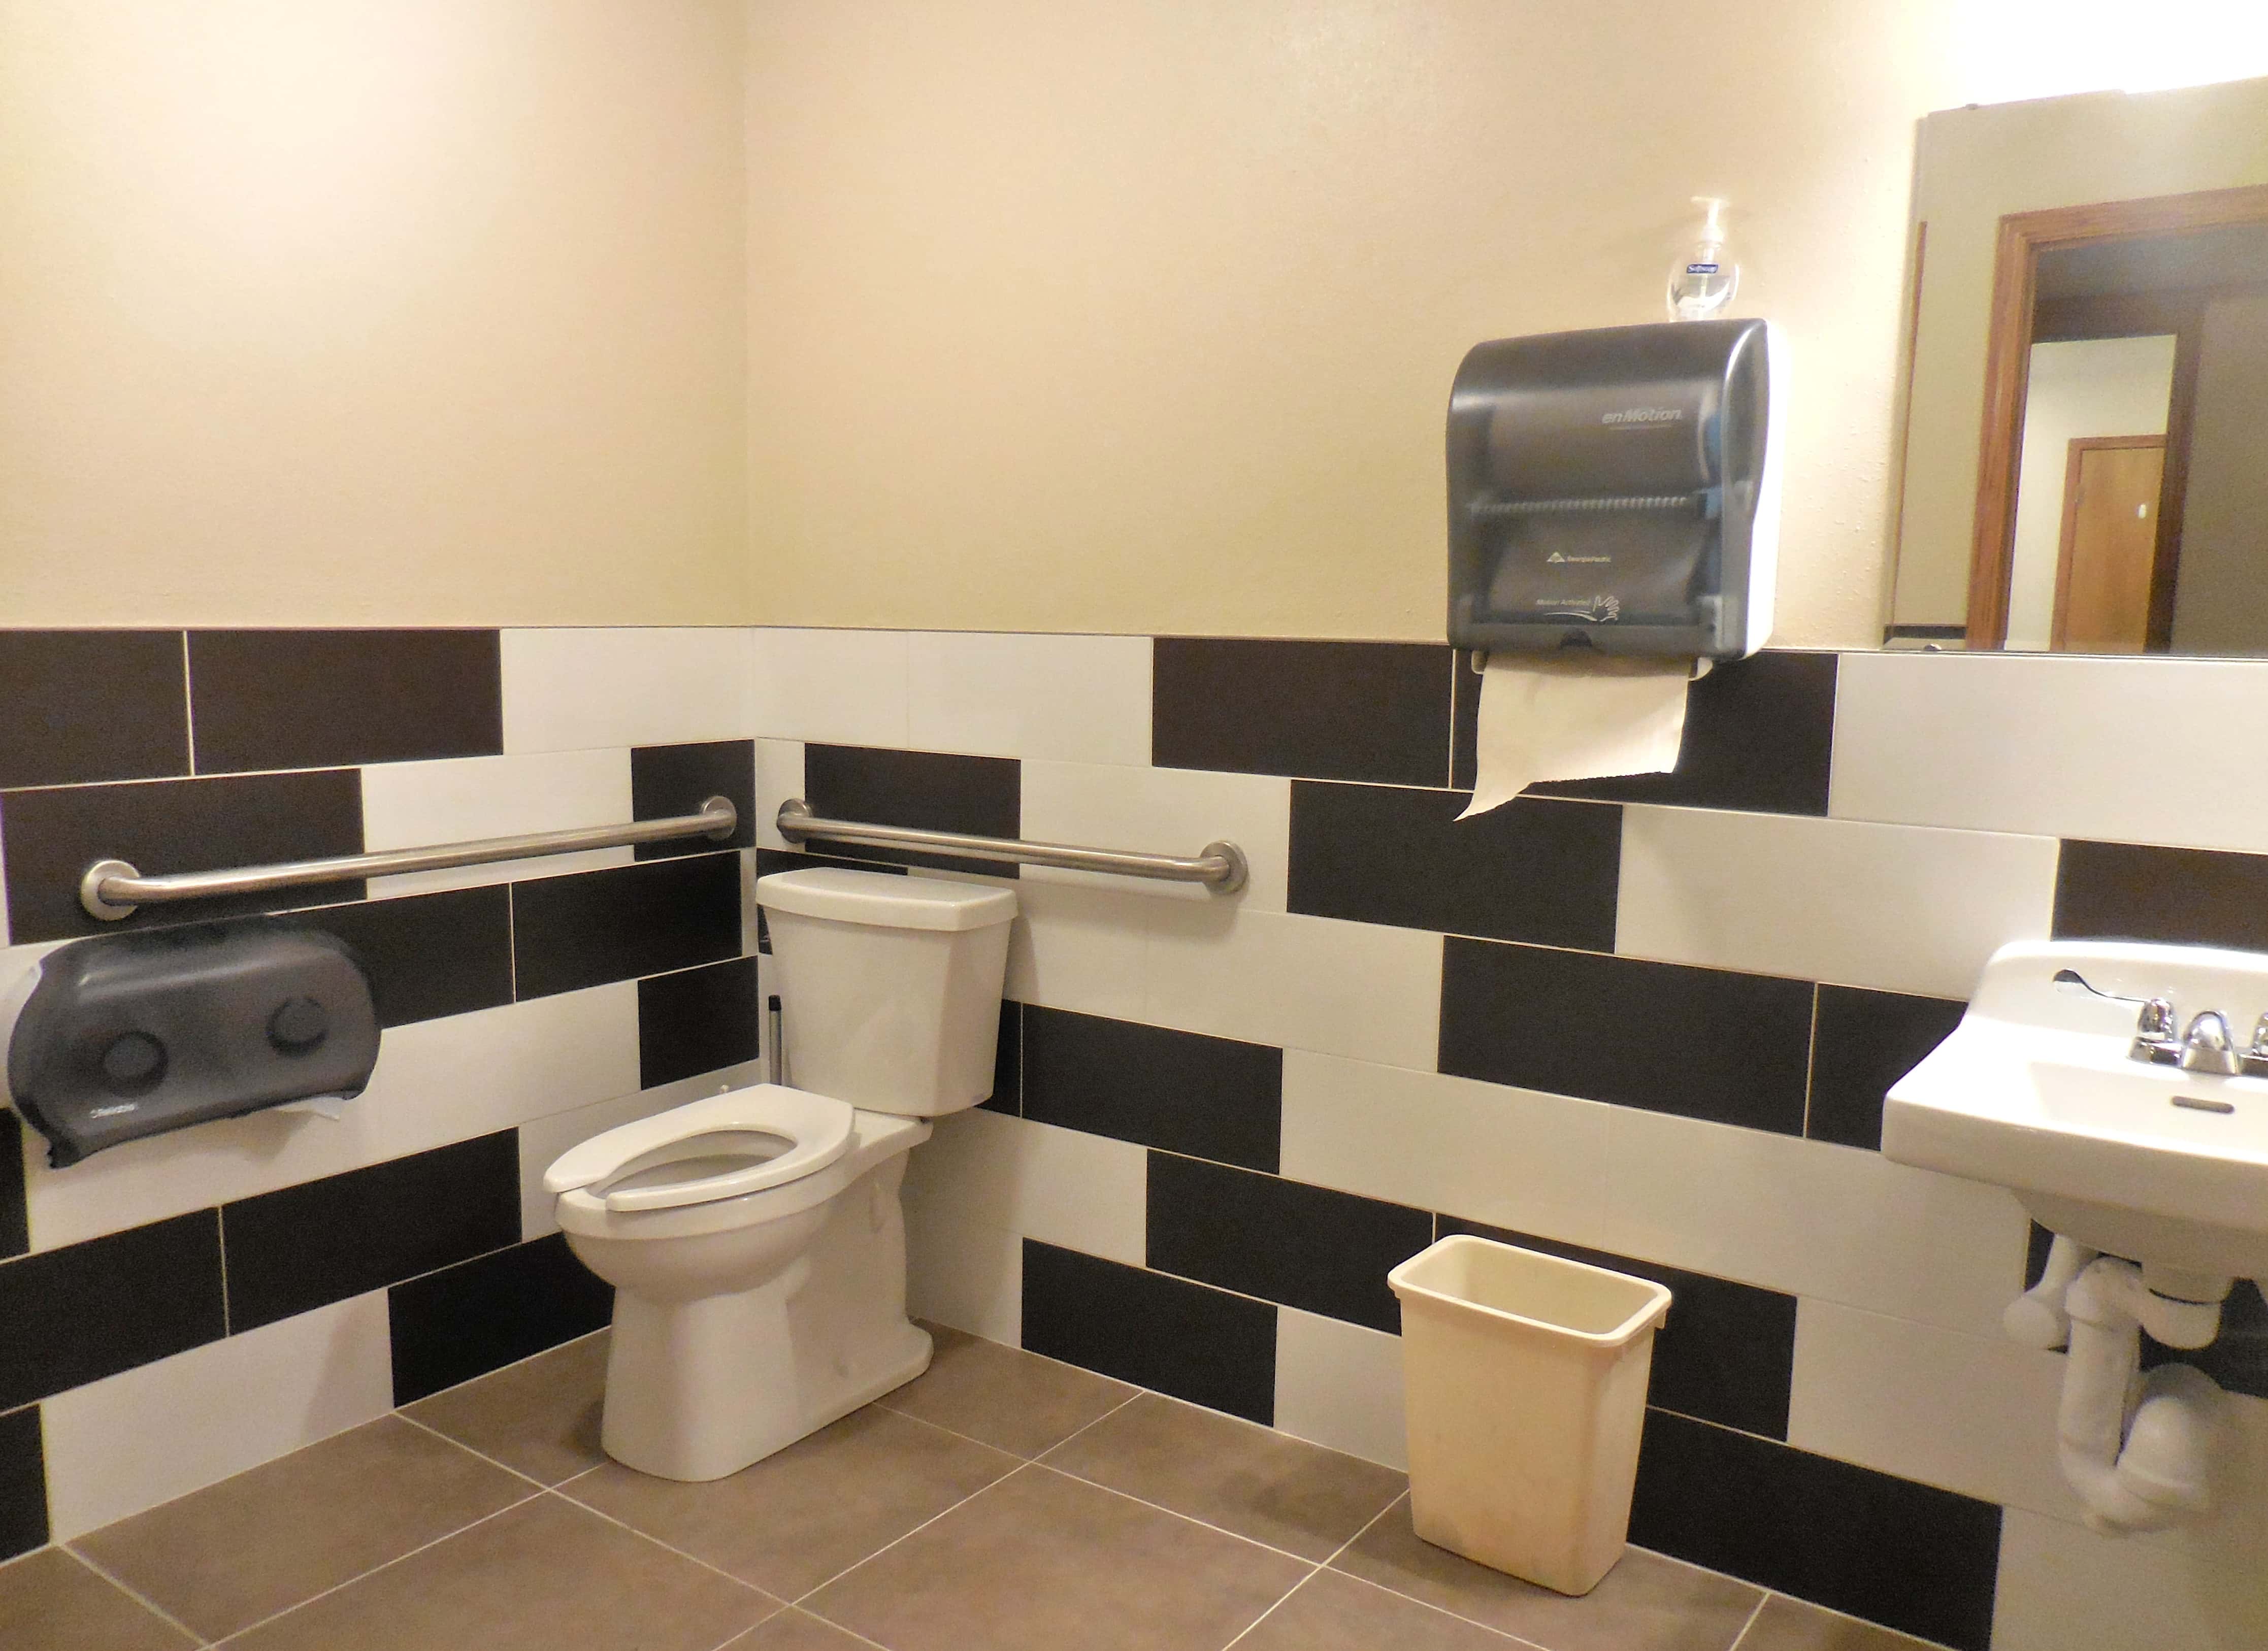 sierra-theatre-updated-restroom-pic-2